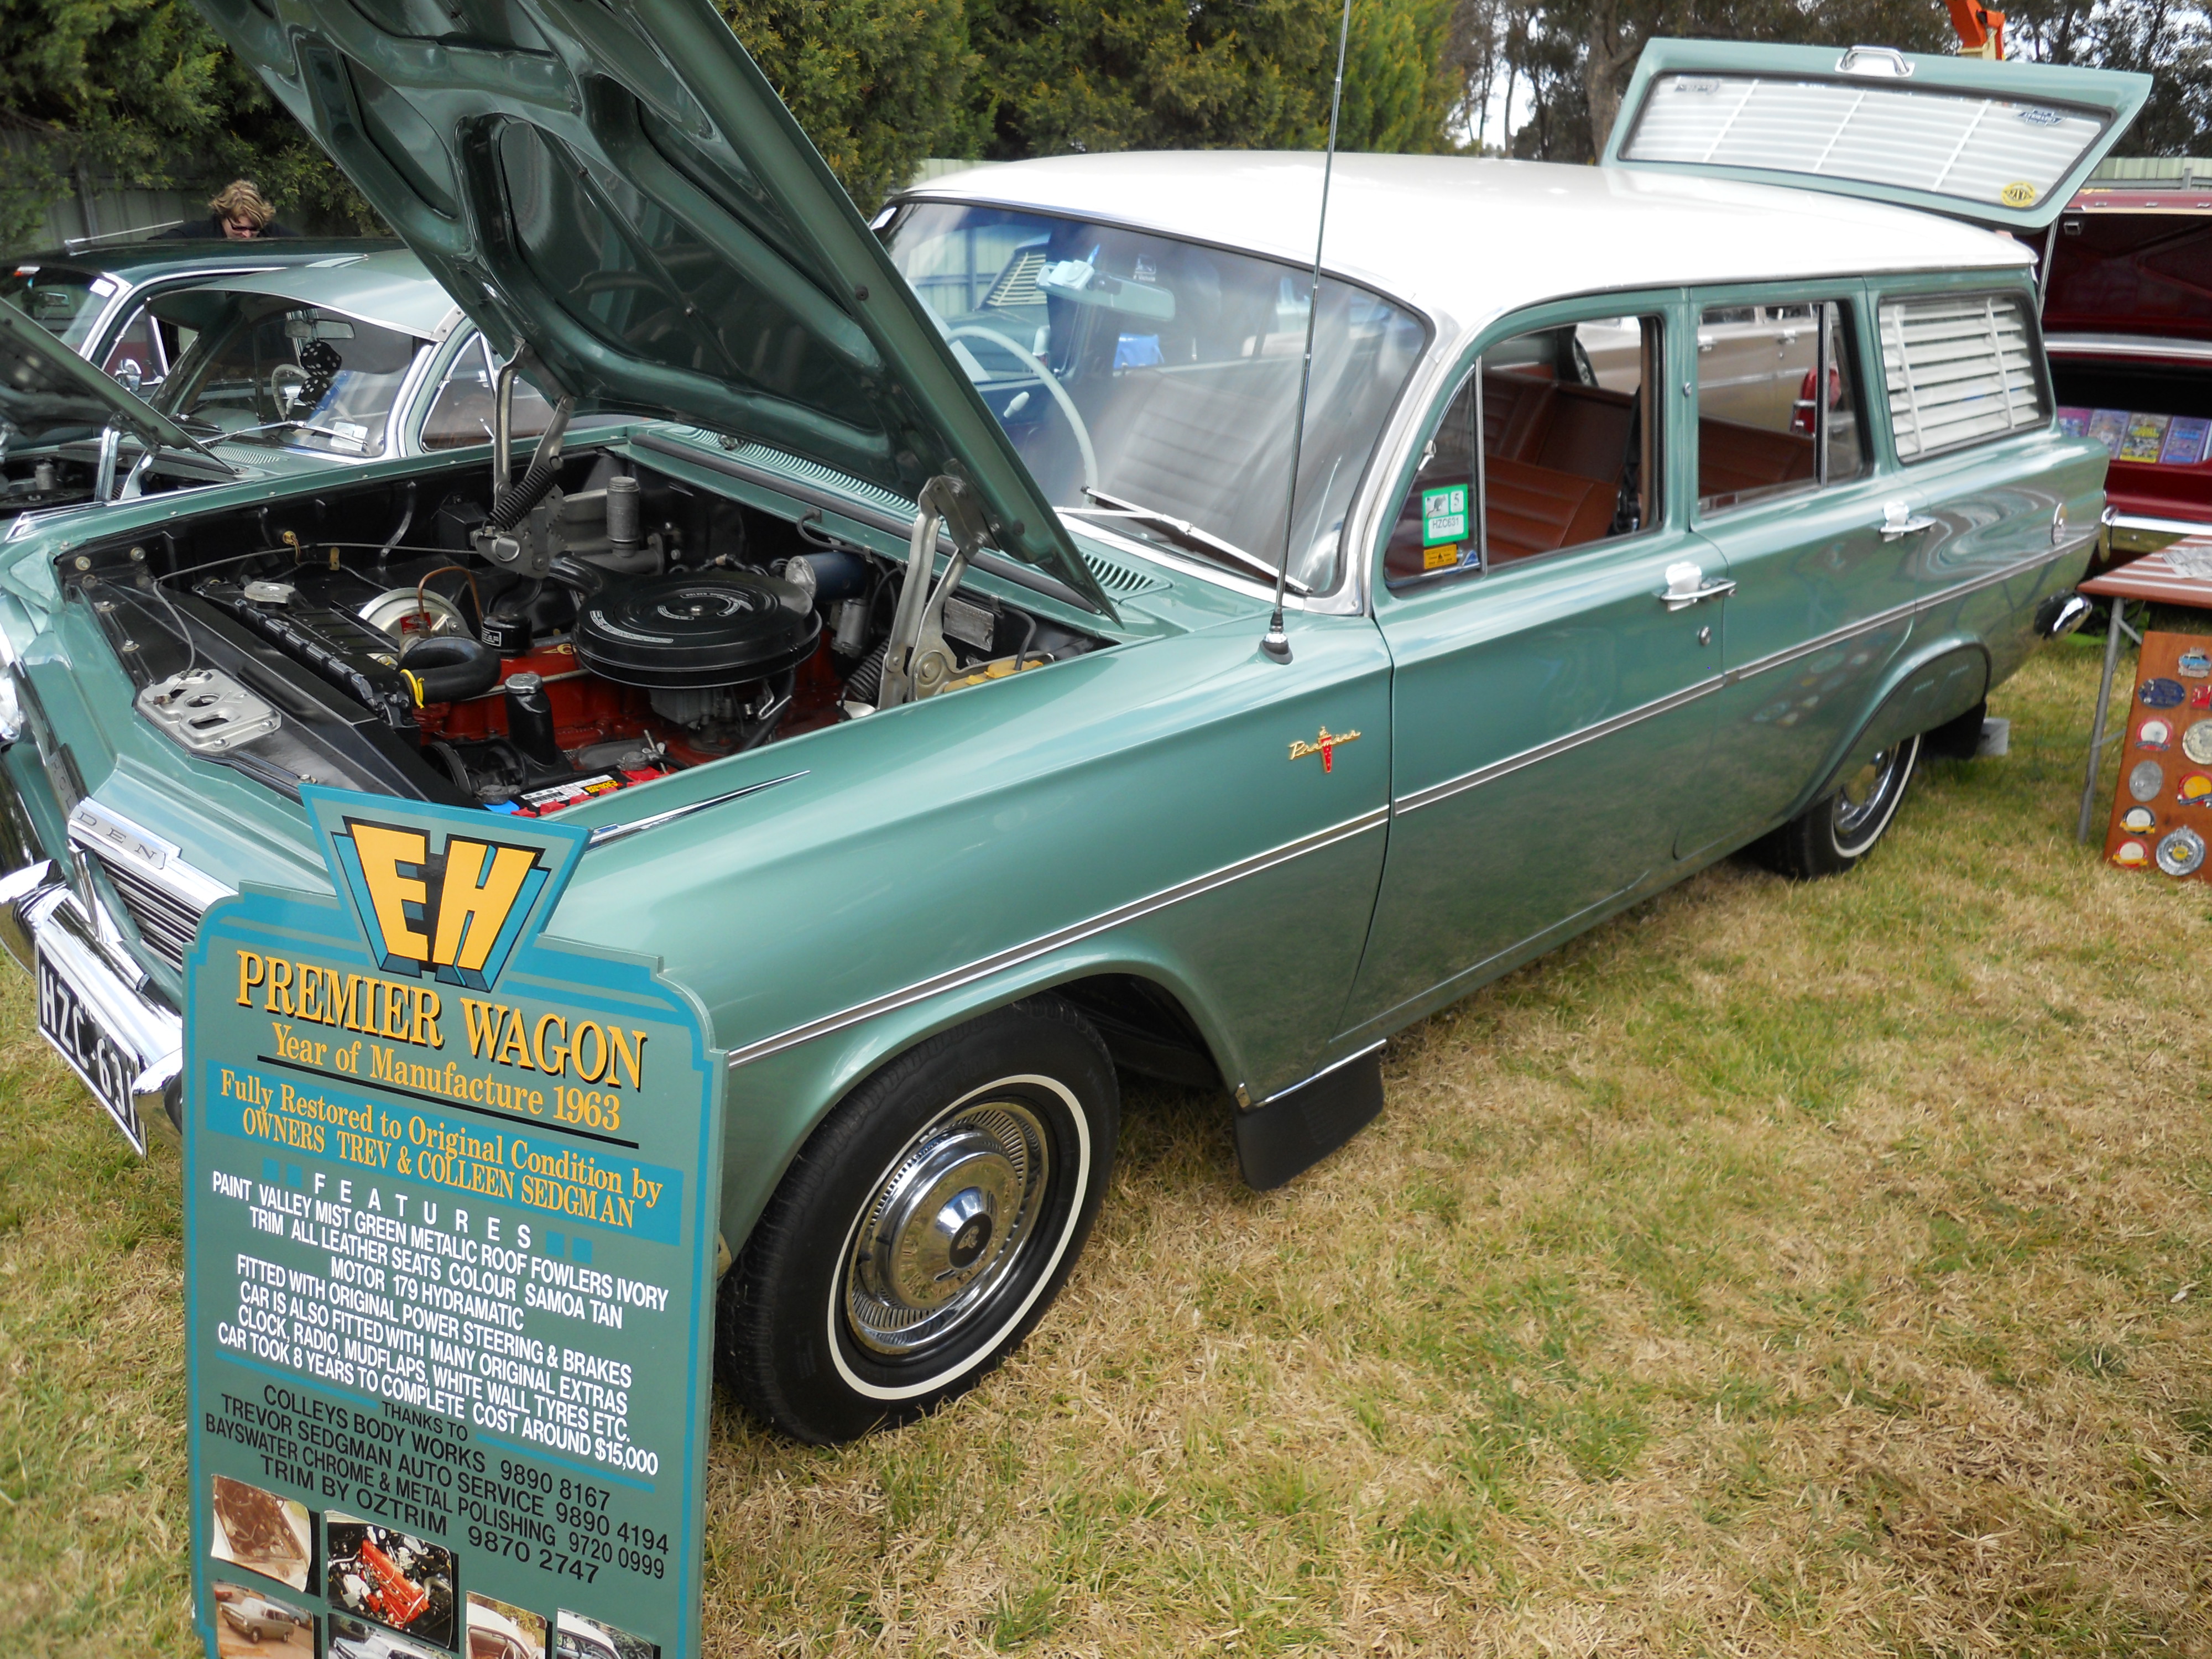 1963 EH Holden Premier Wagon | Flickr - Photo Sharing!